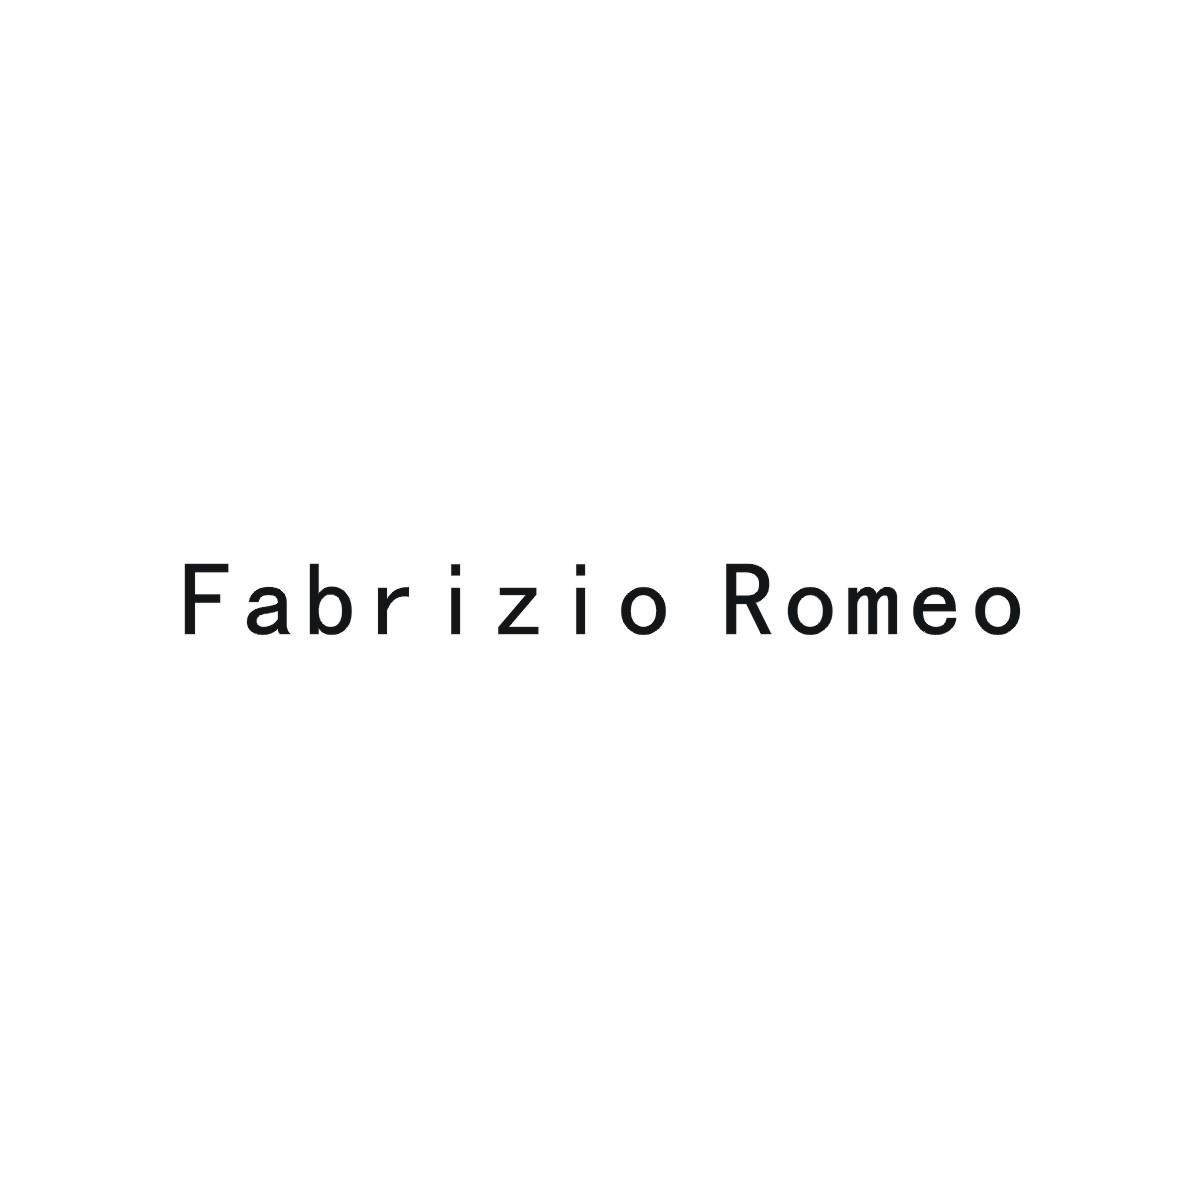 FABRIZIO ROMEO烟斗通条商标转让费用买卖交易流程